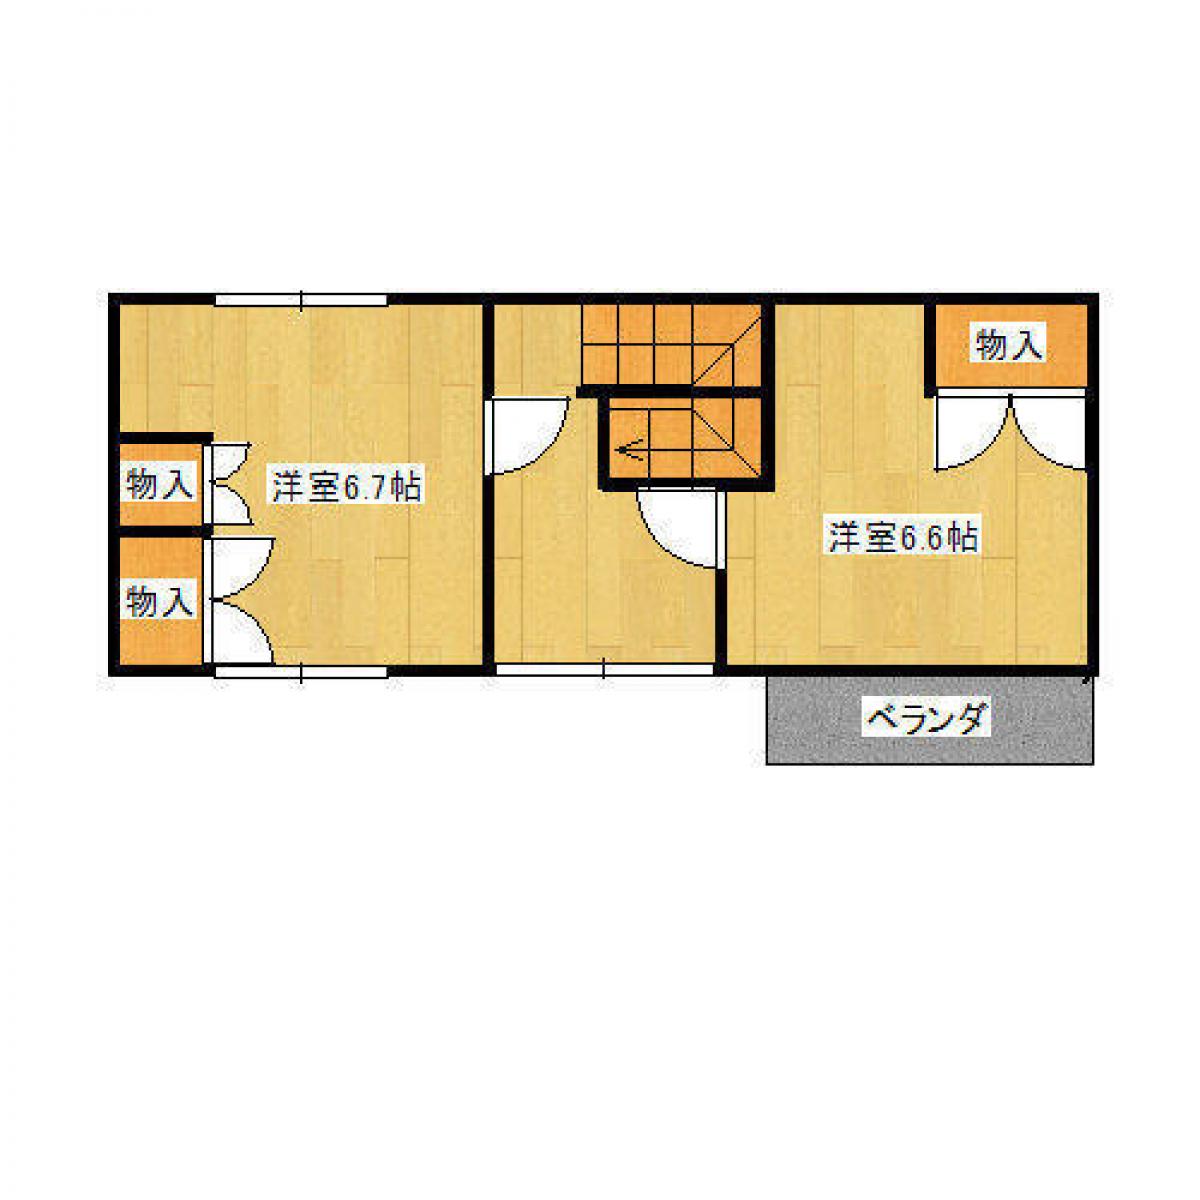 Picture of Home For Sale in Yonezawa Shi, Yamagata, Japan